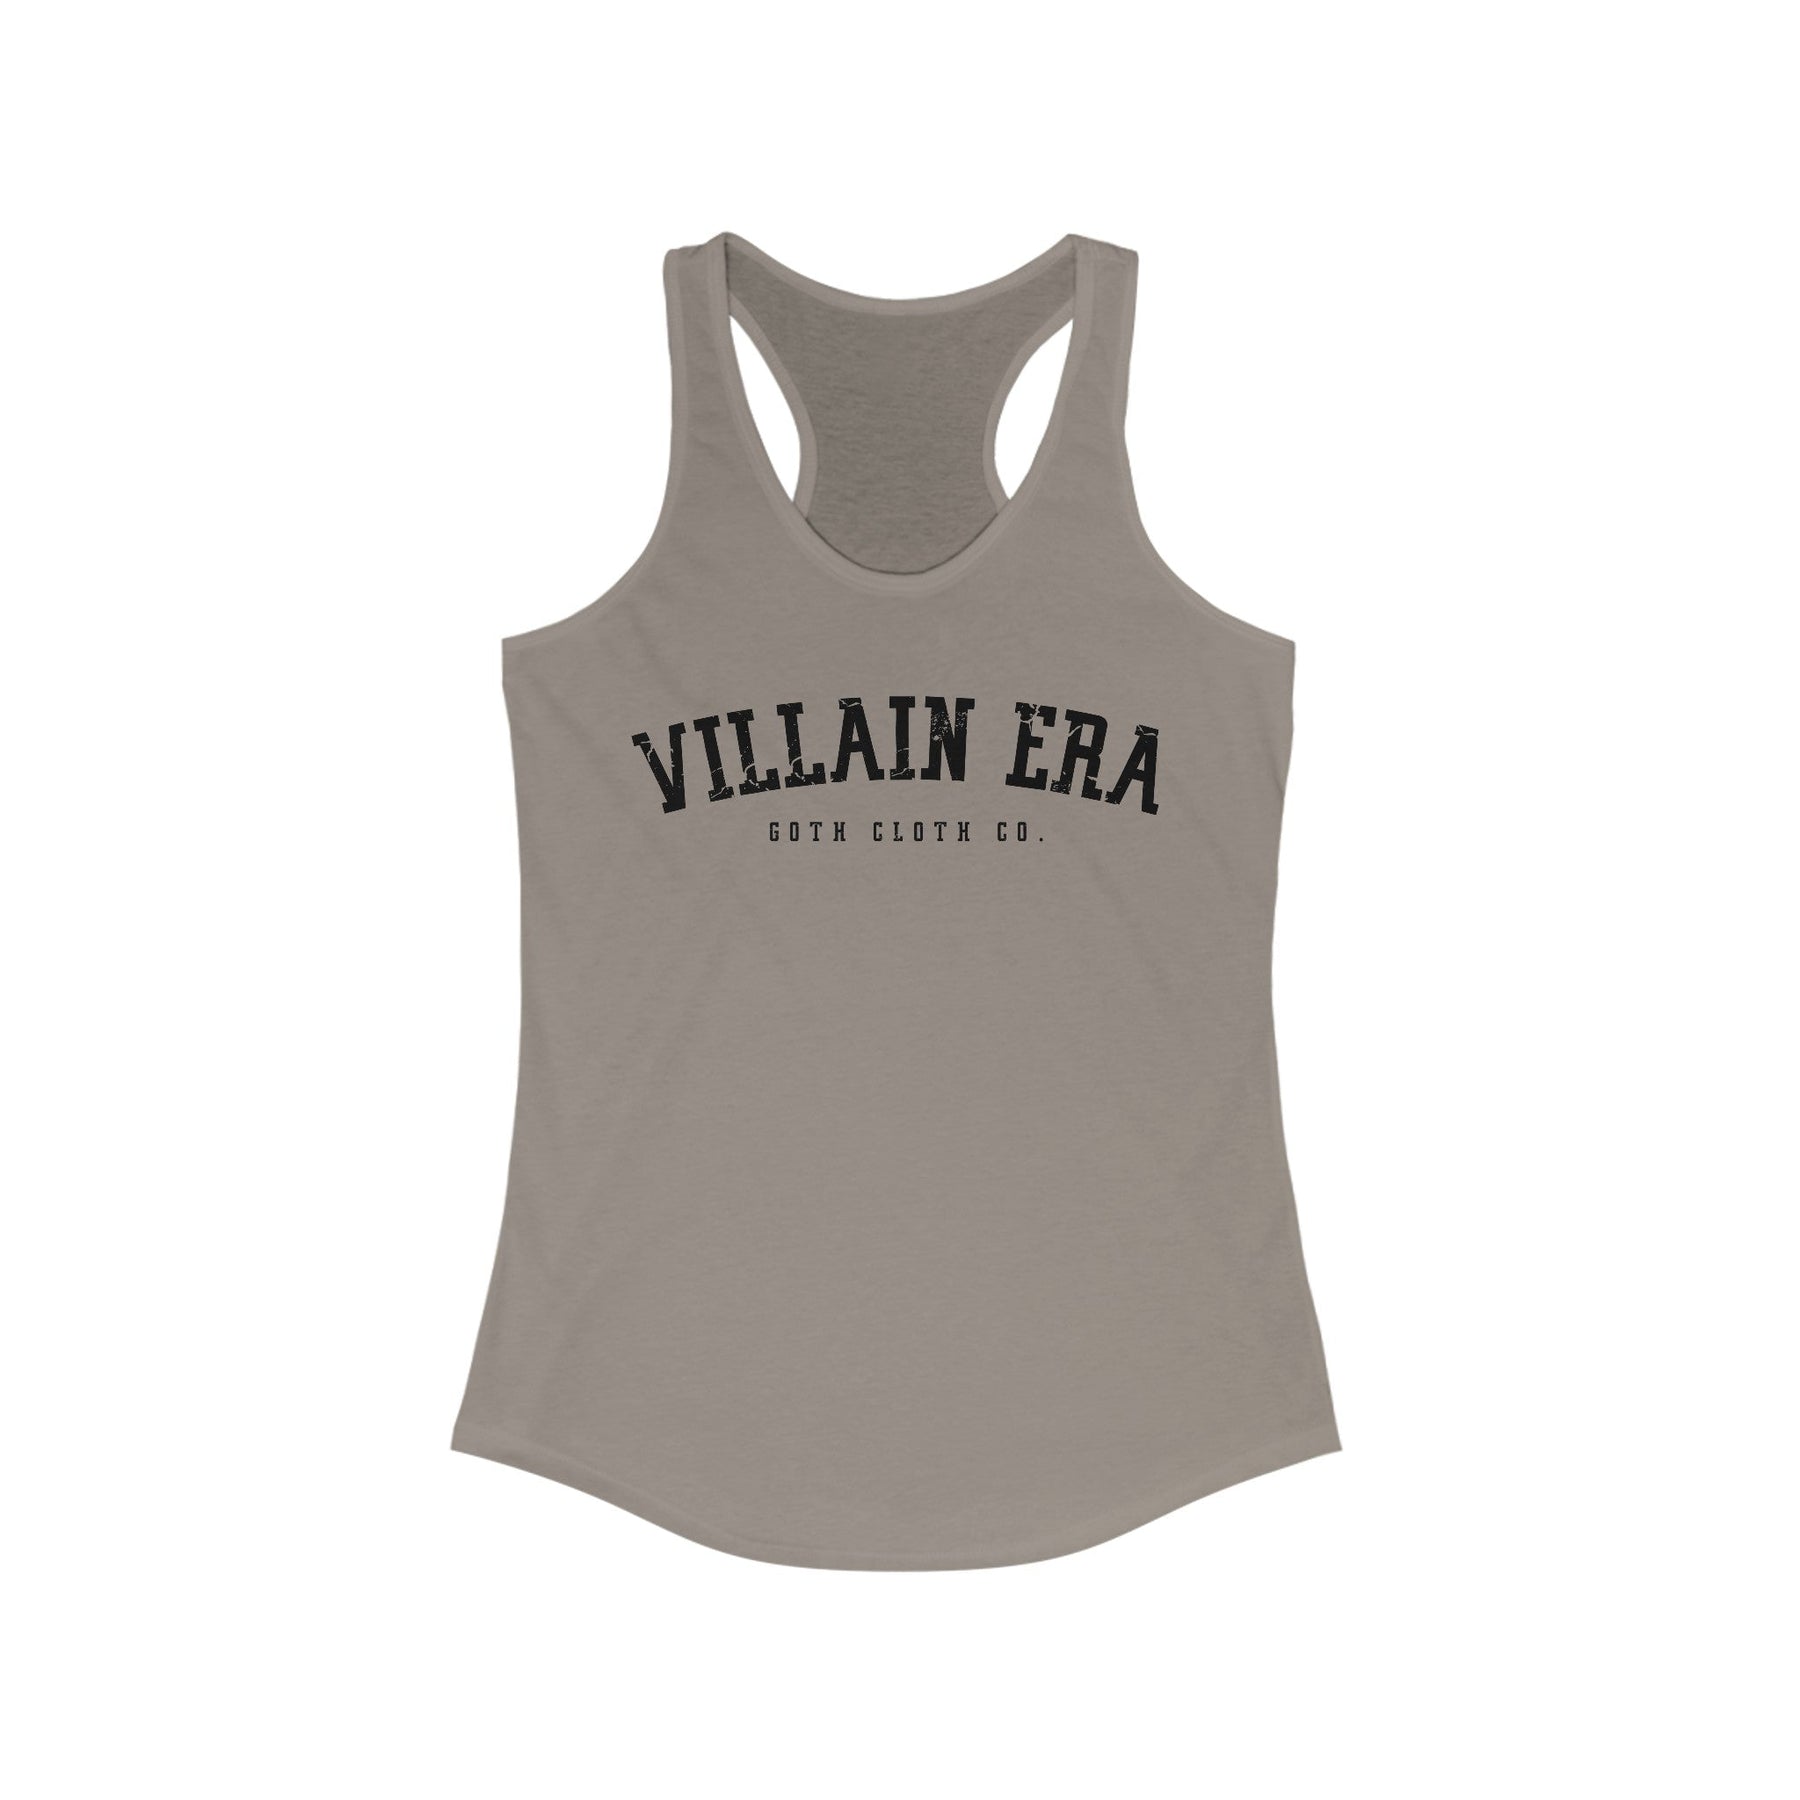 Villain Era Women's Racerback Tank - Goth Cloth Co.Tank Top16960878240894860434